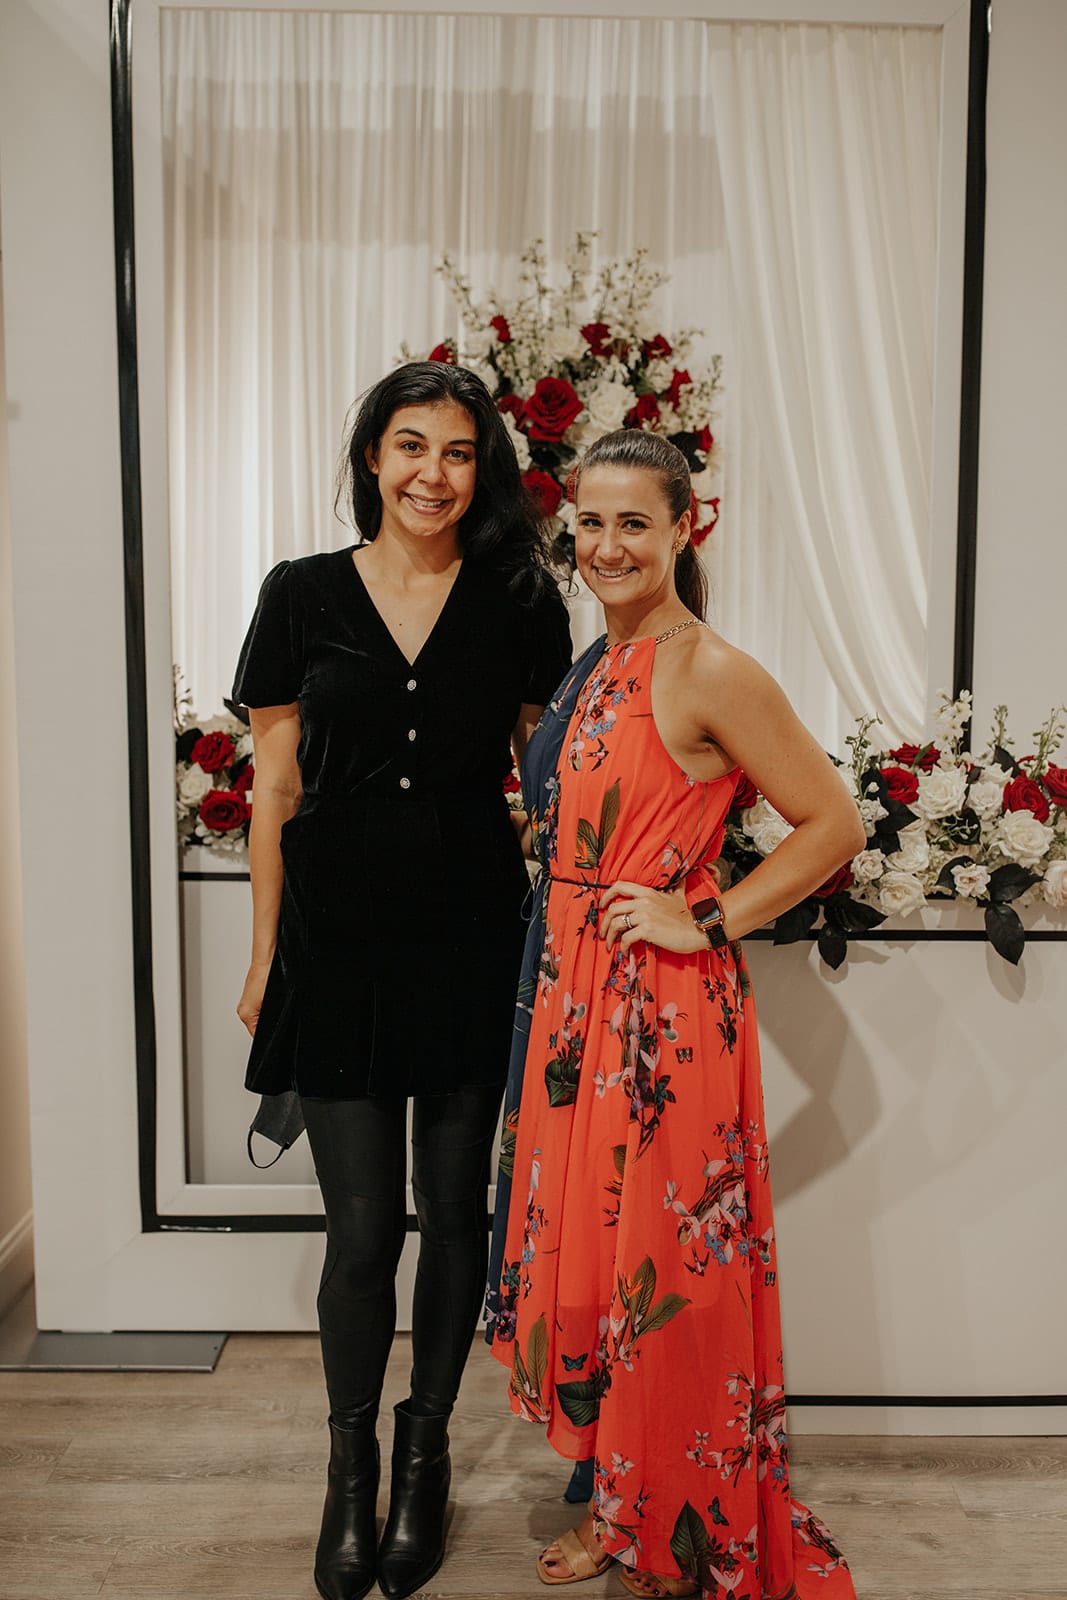 The Bridal Finery Fashion Showcase, Roberta and Tali